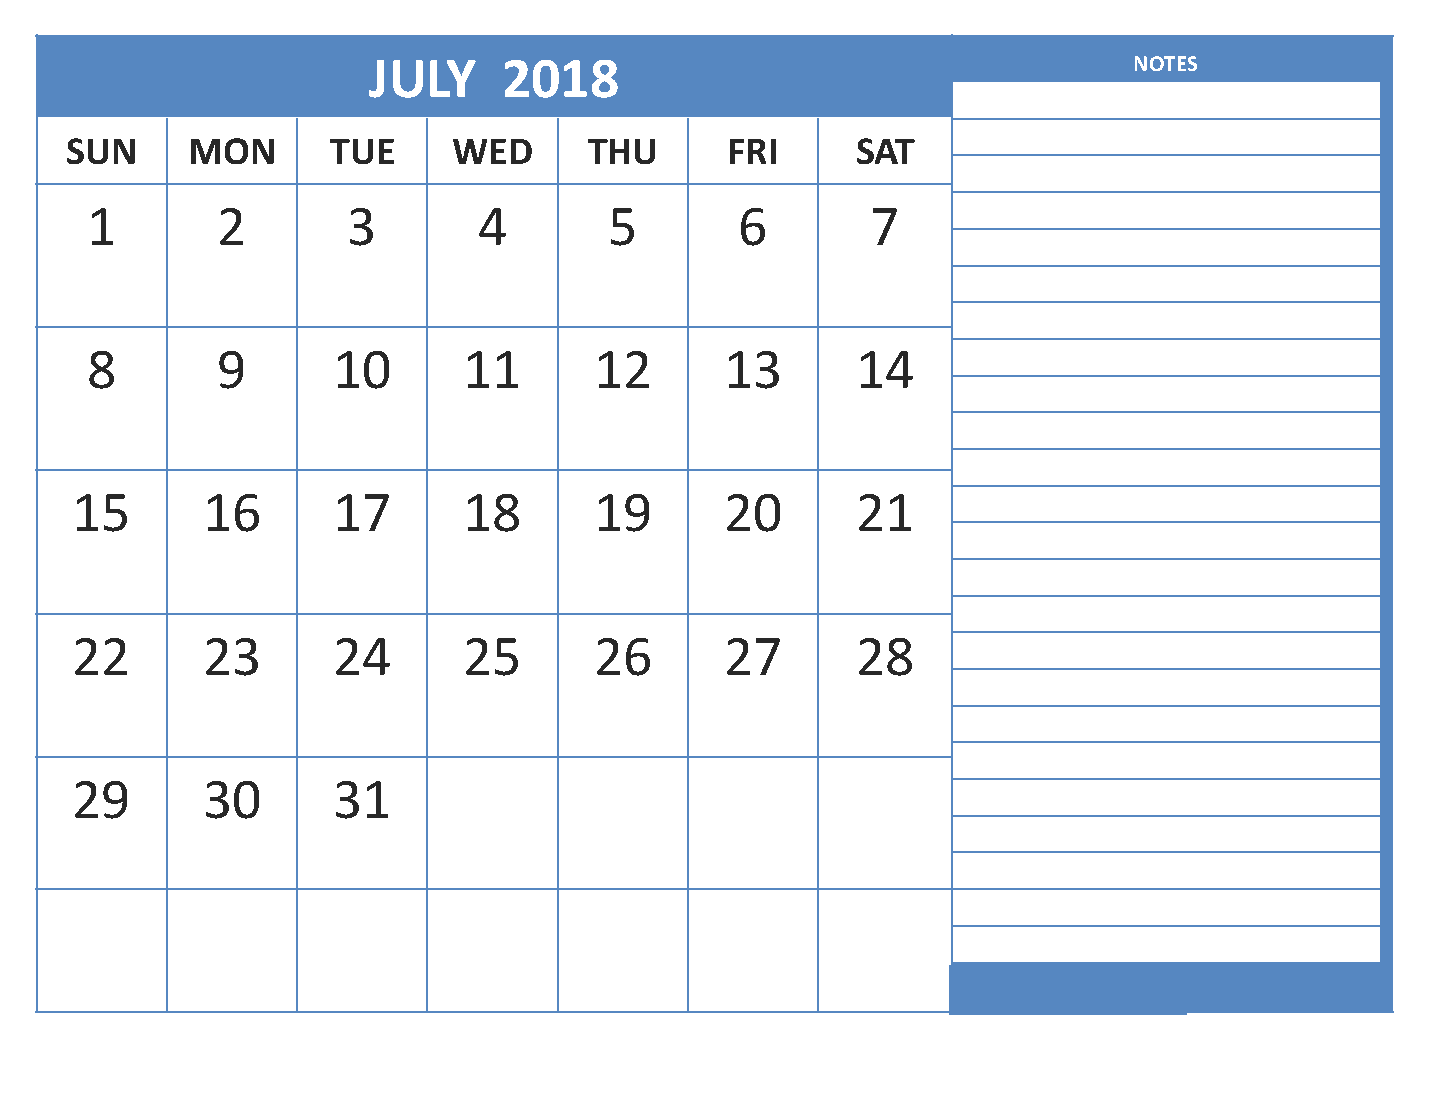 July 2018 Monthly Calendar